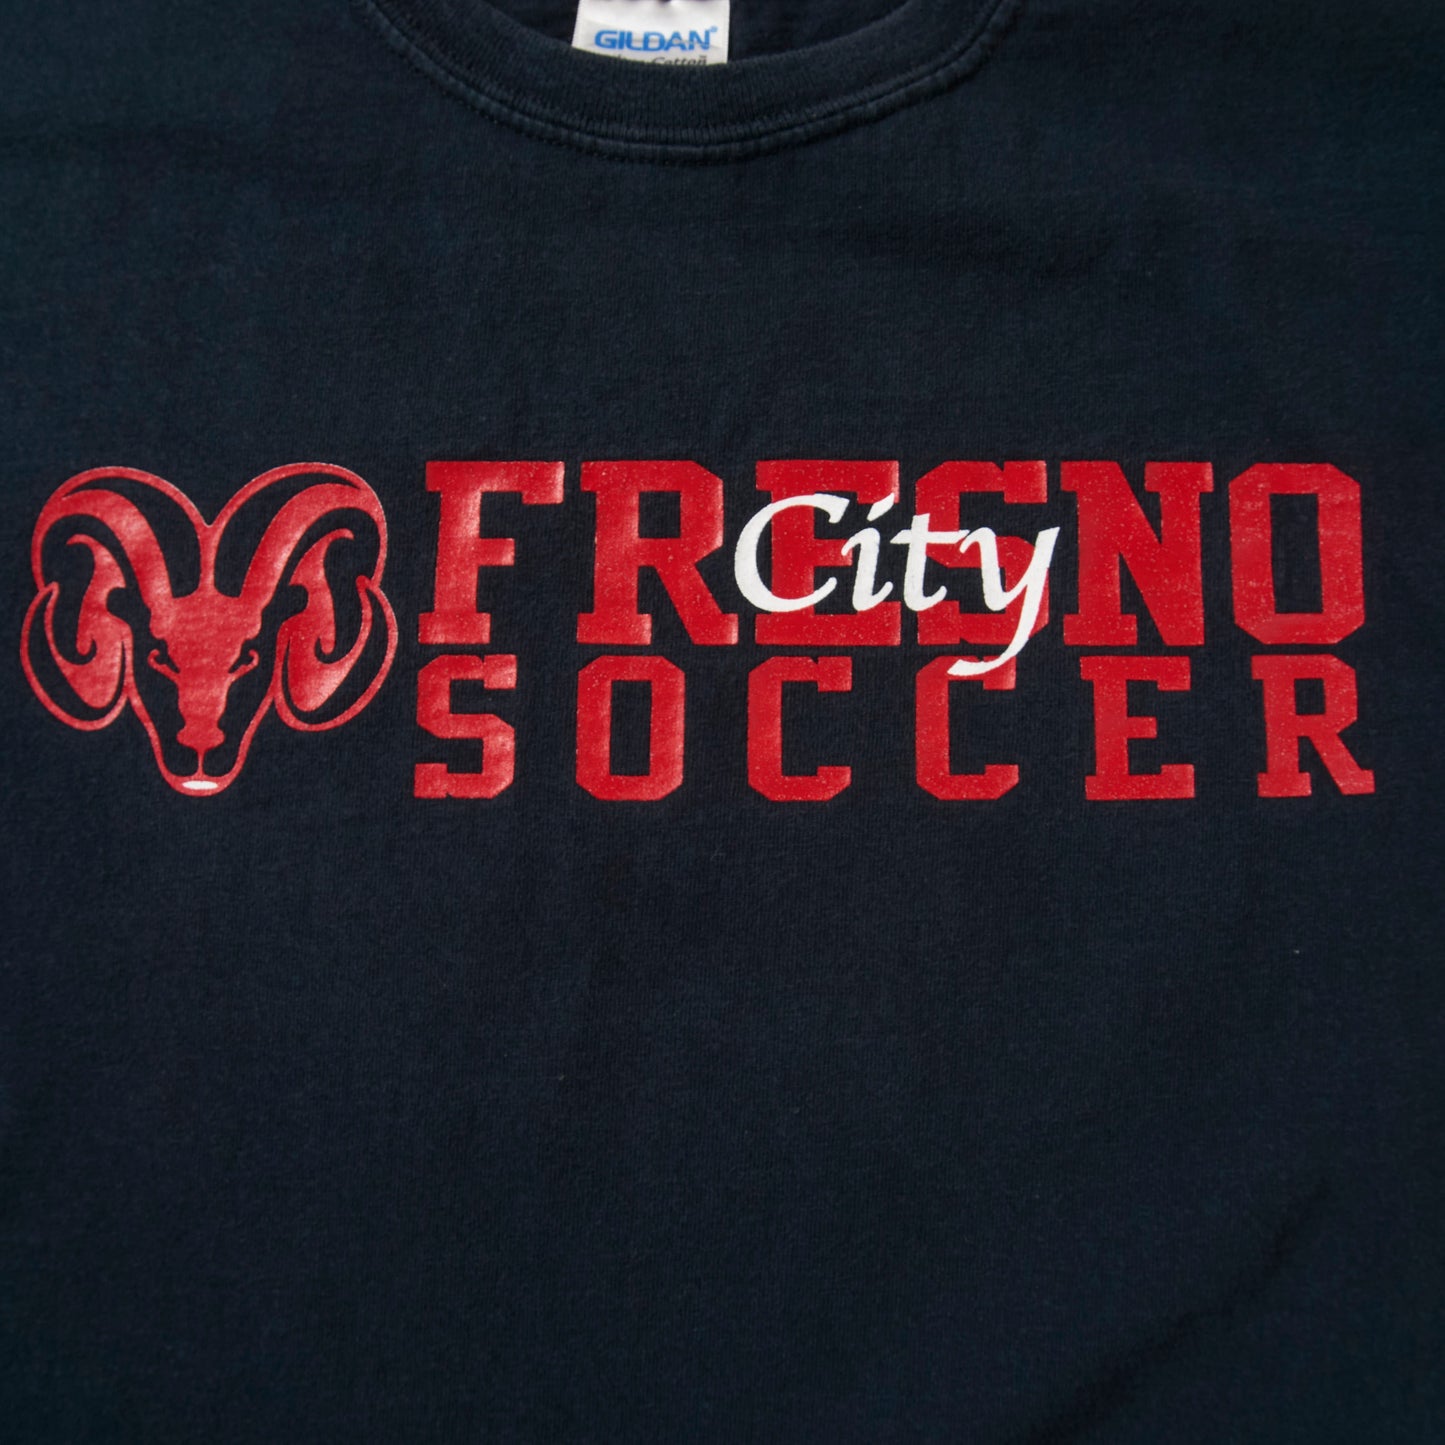 Vintage Fresno Soccer T-shirt